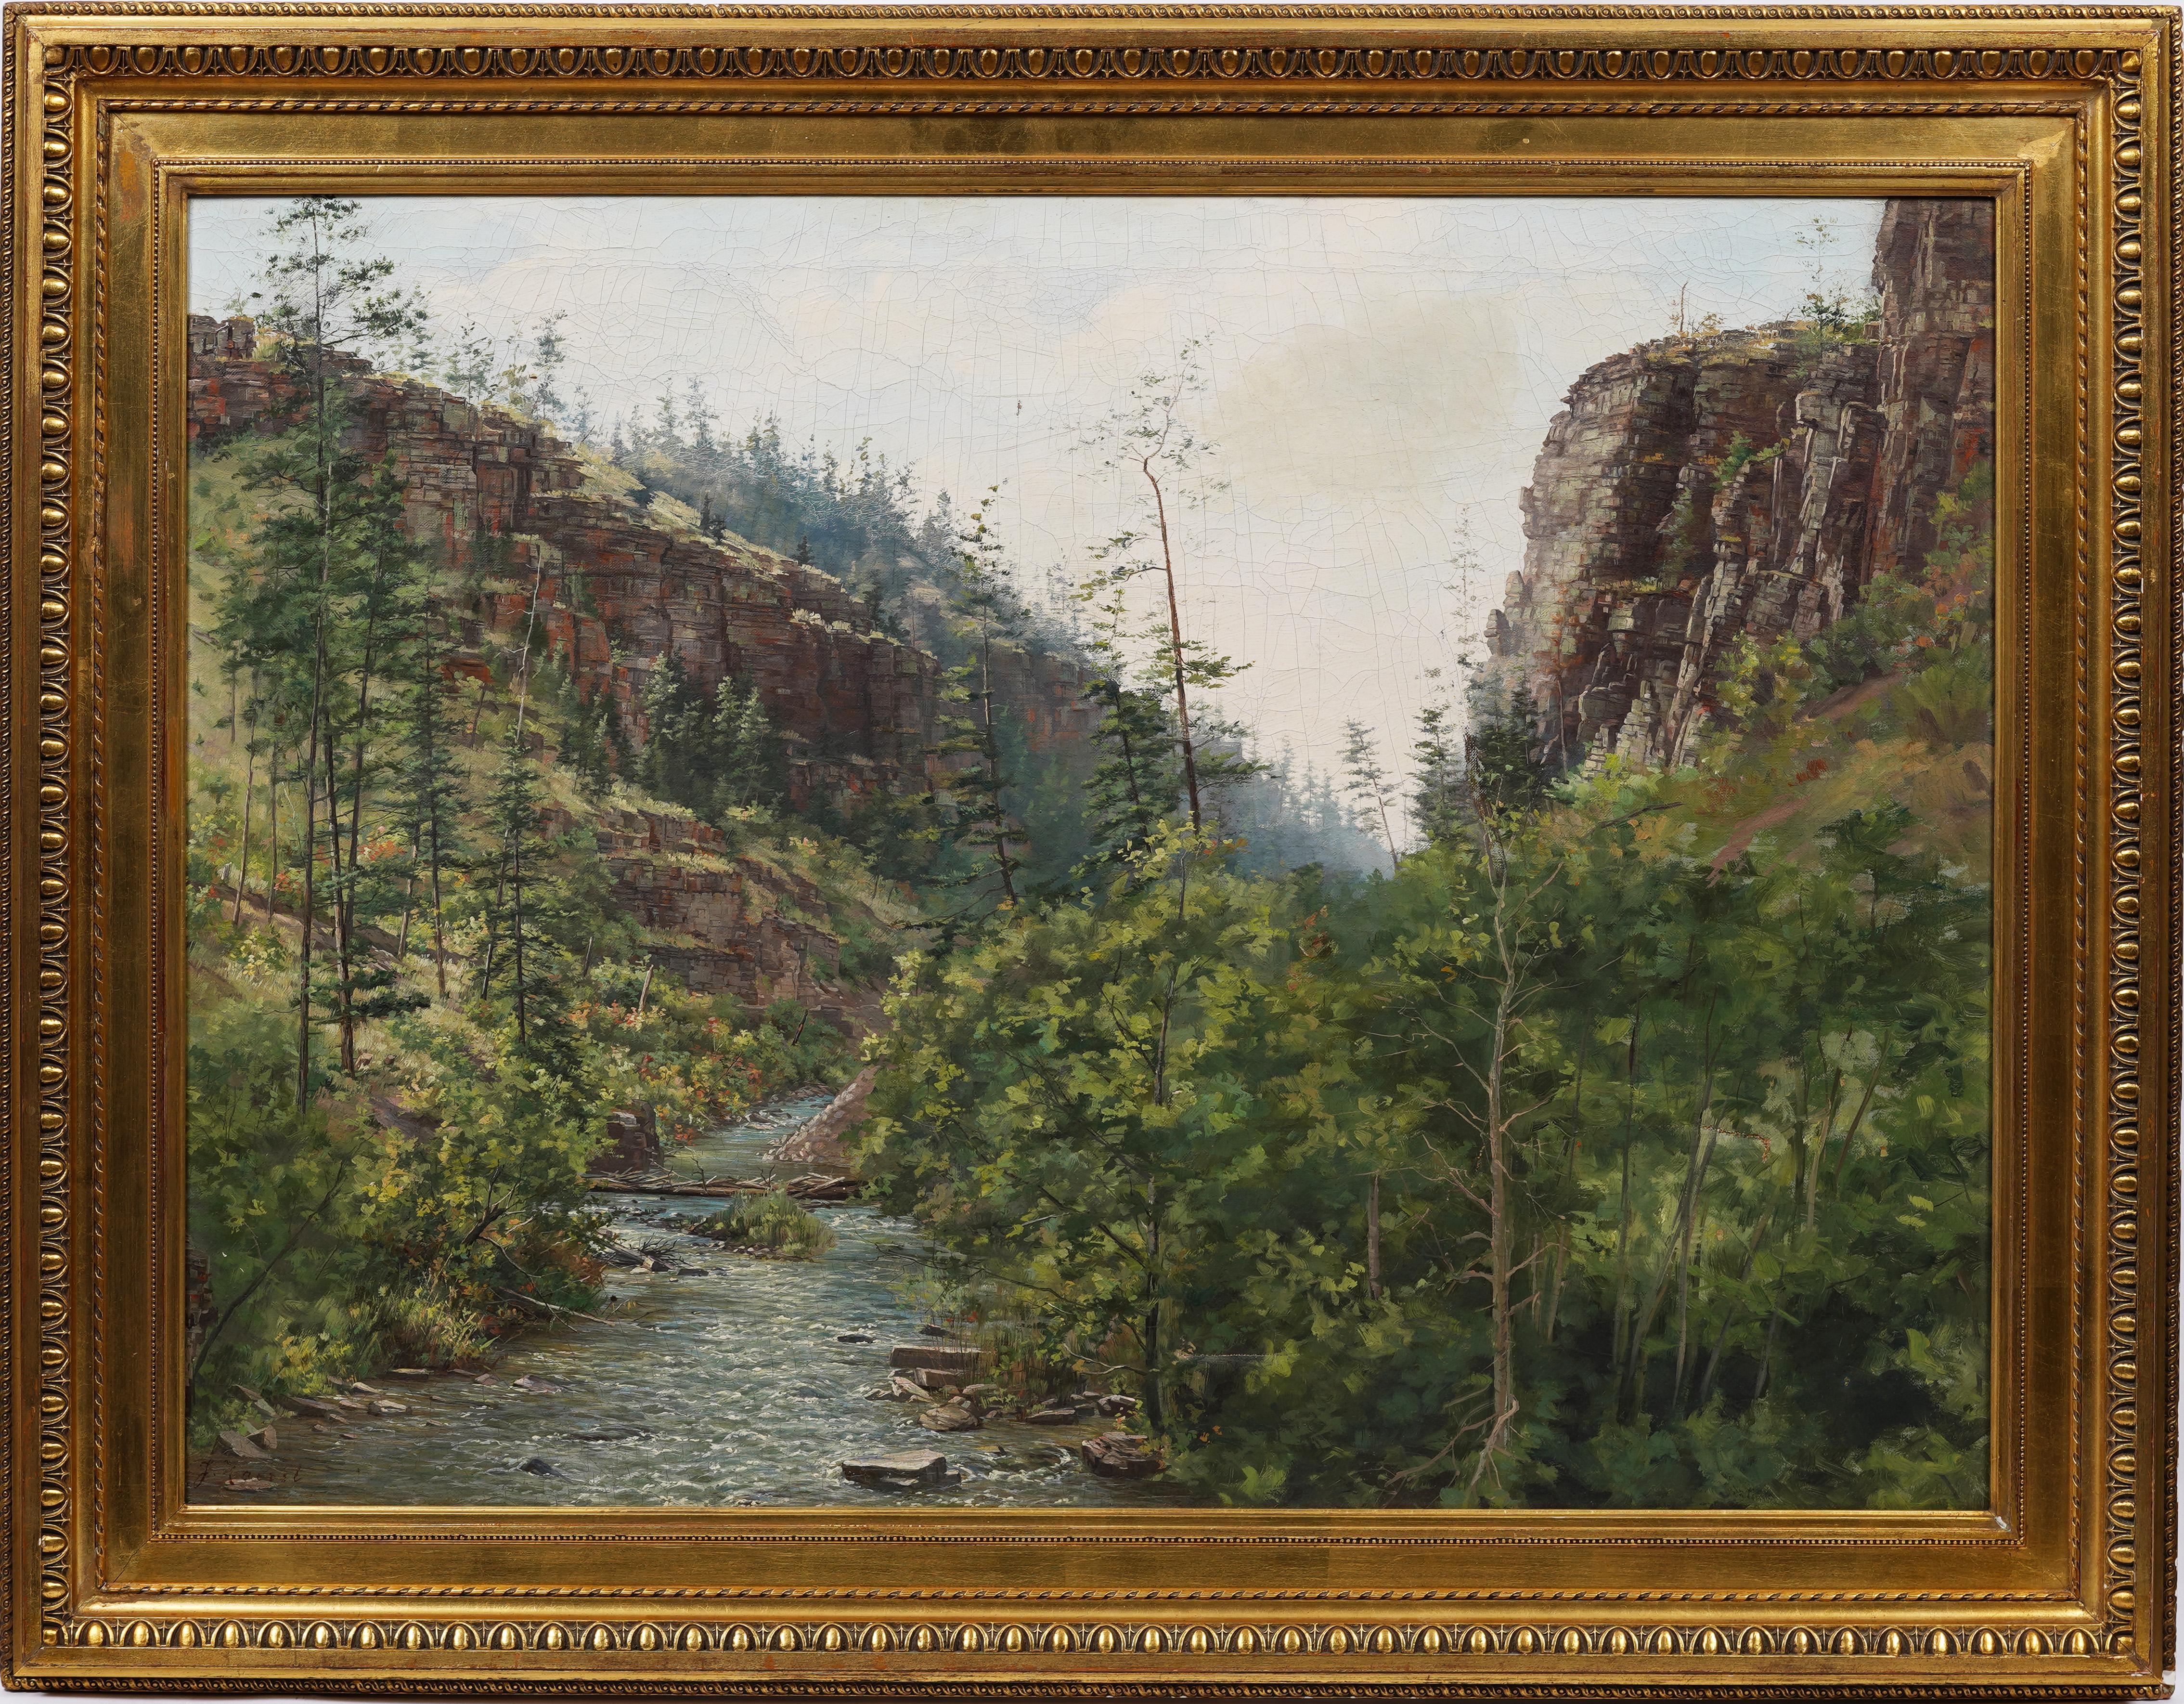 Antique American impressionist river gorge landscape painting.  Oil on canvas.  Framed.  Image size, 37L x 27H.   Very finely framed.  Signed illegibly.  


